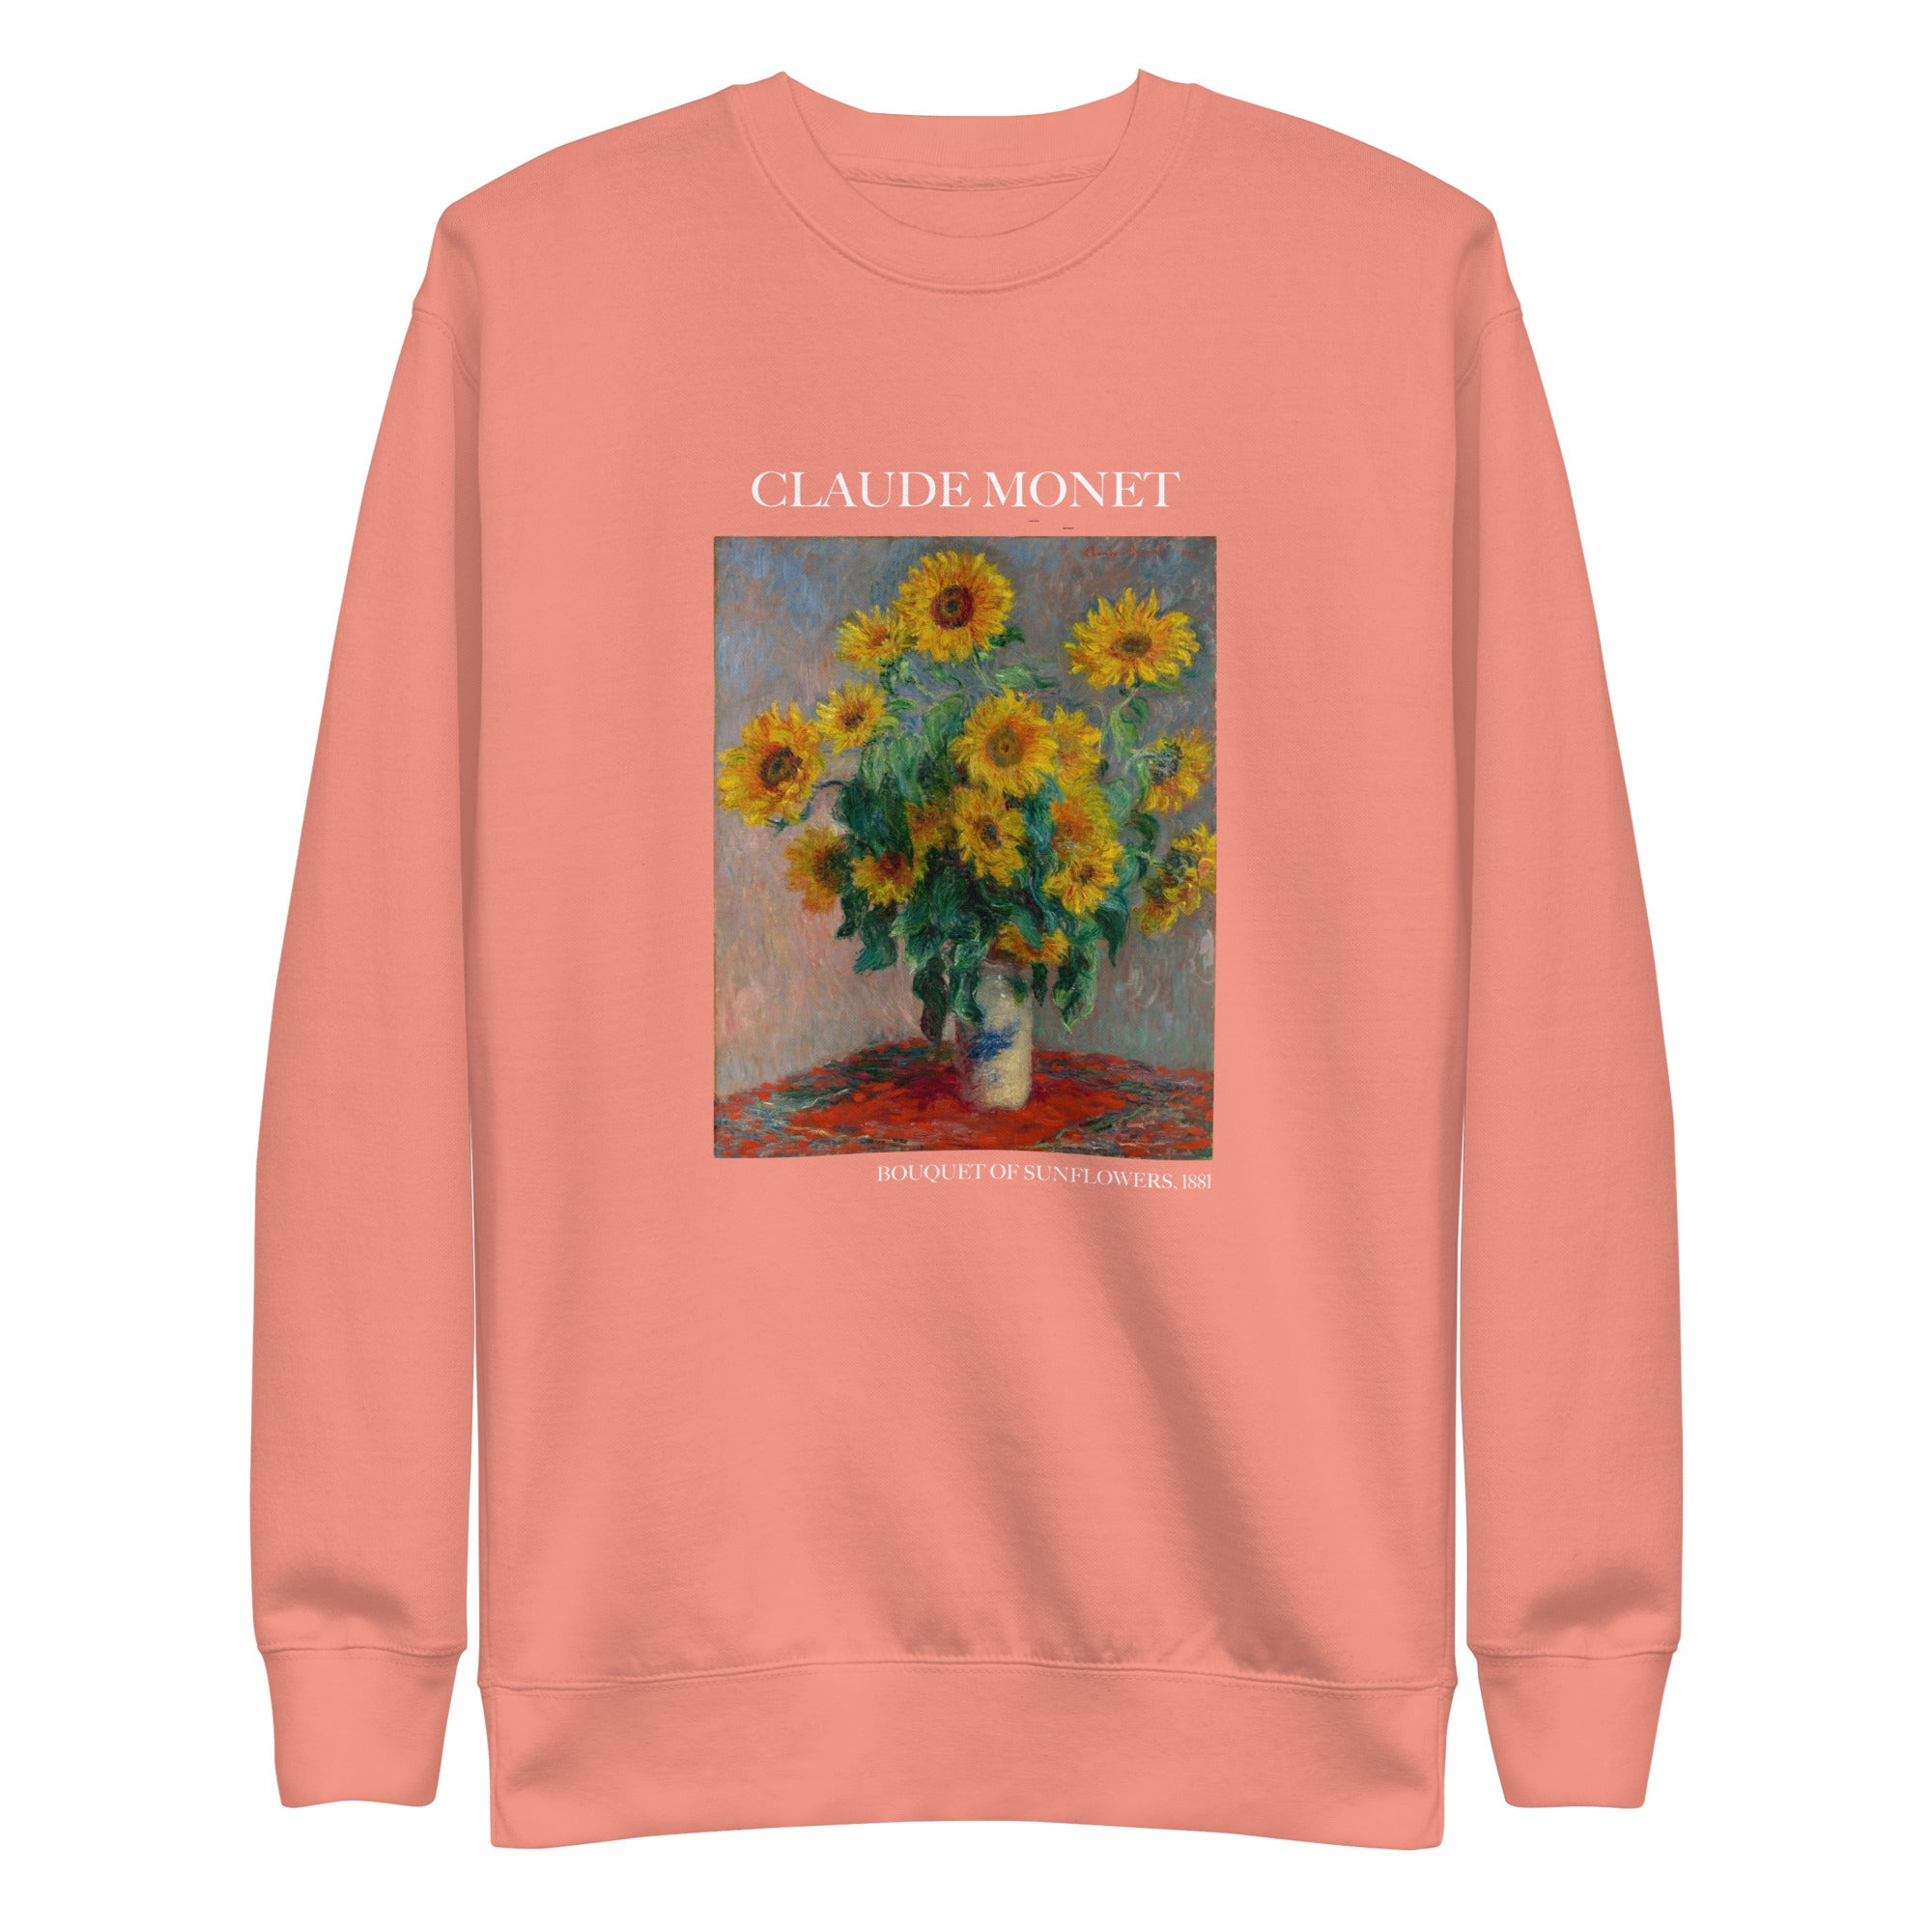 Claude Monet 'Bouquet of Sunflowers' Famous Painting Sweatshirt | Unisex Premium Sweatshirt